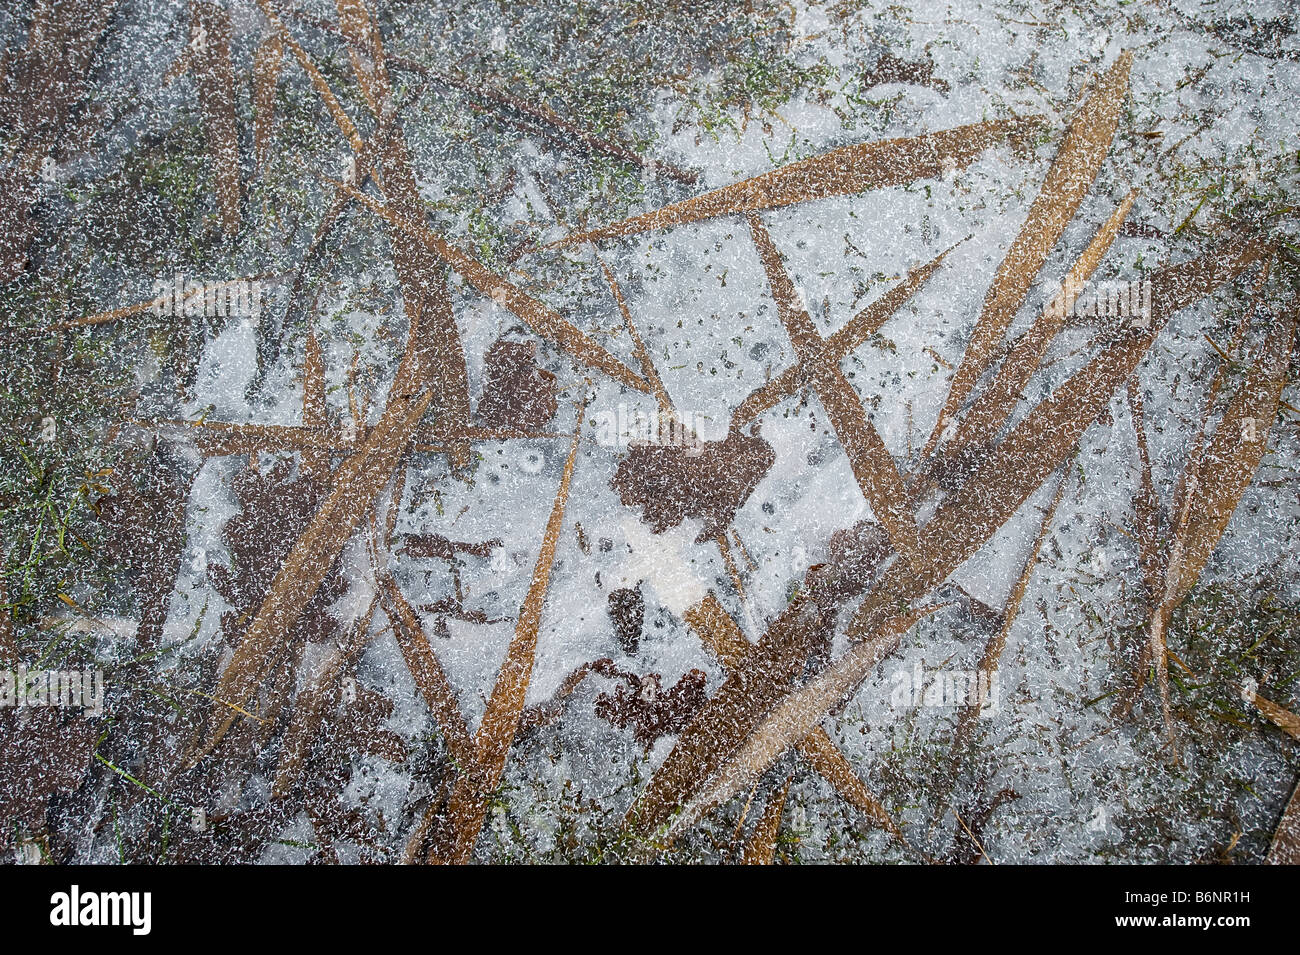 Plants frosen in ice, Sweden Stock Photo